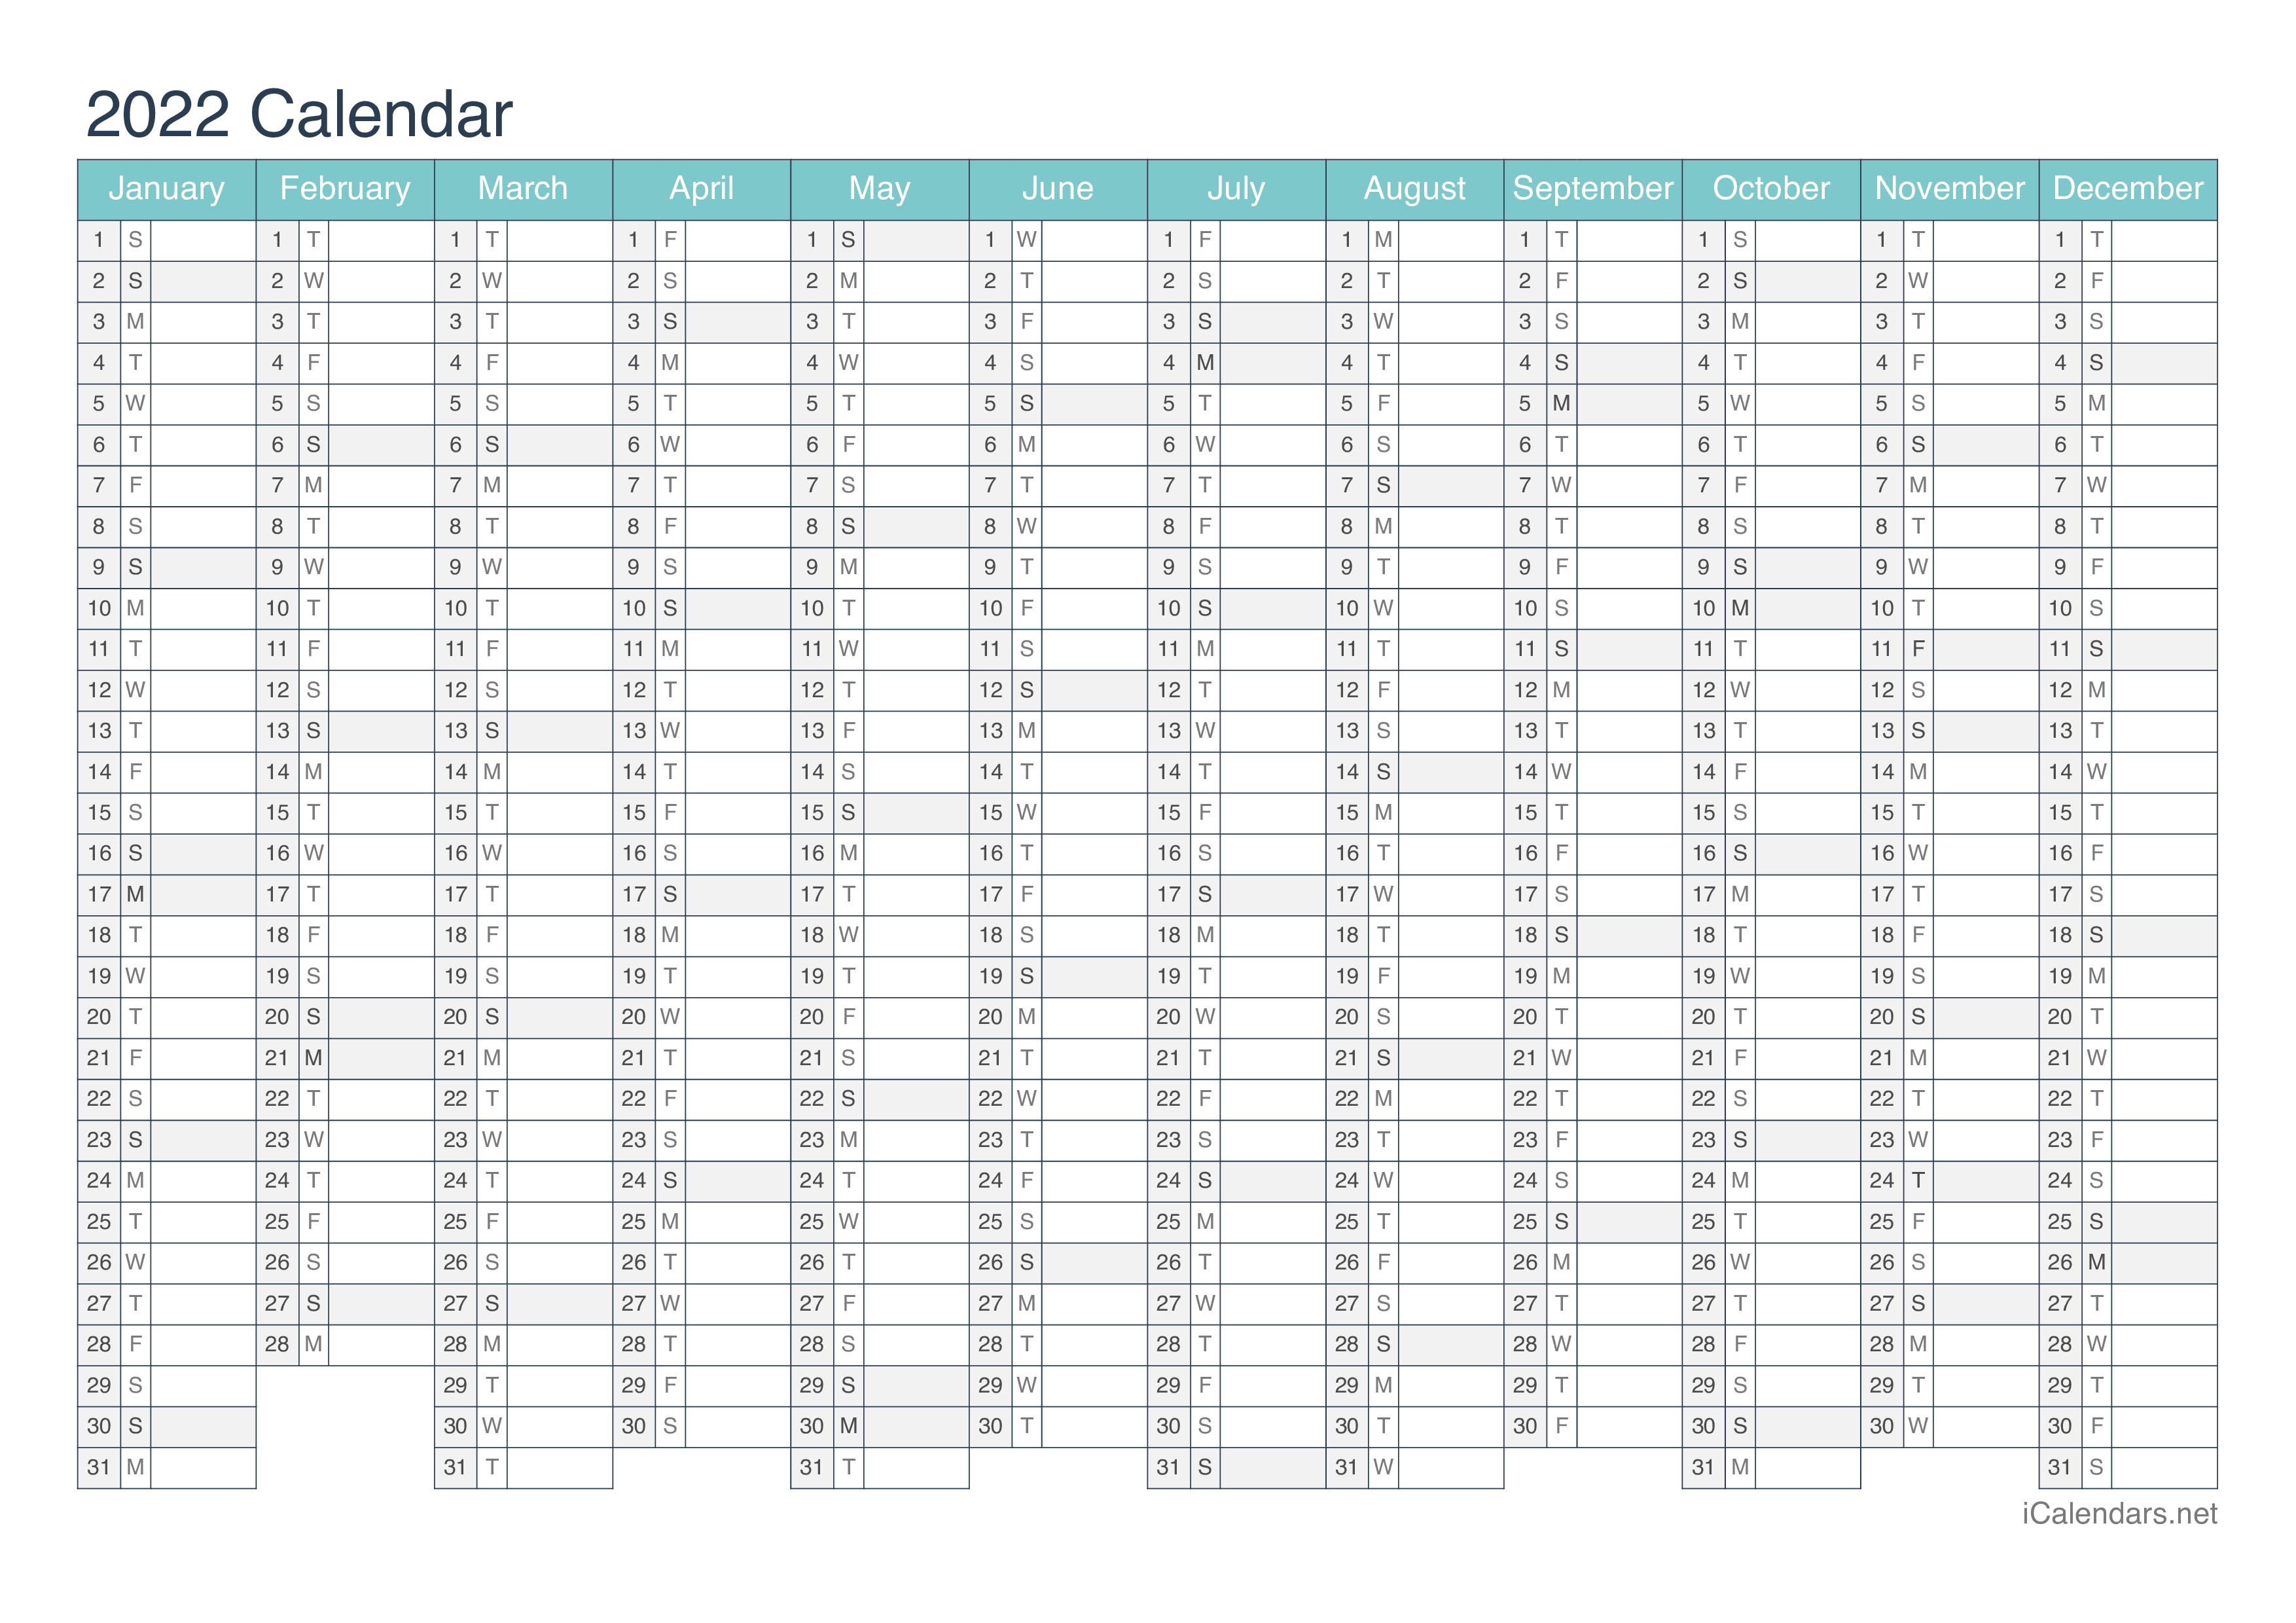 Fedex Calendar 2022 2022 Printable Calendar - Pdf Or Excel - Icalendars.net